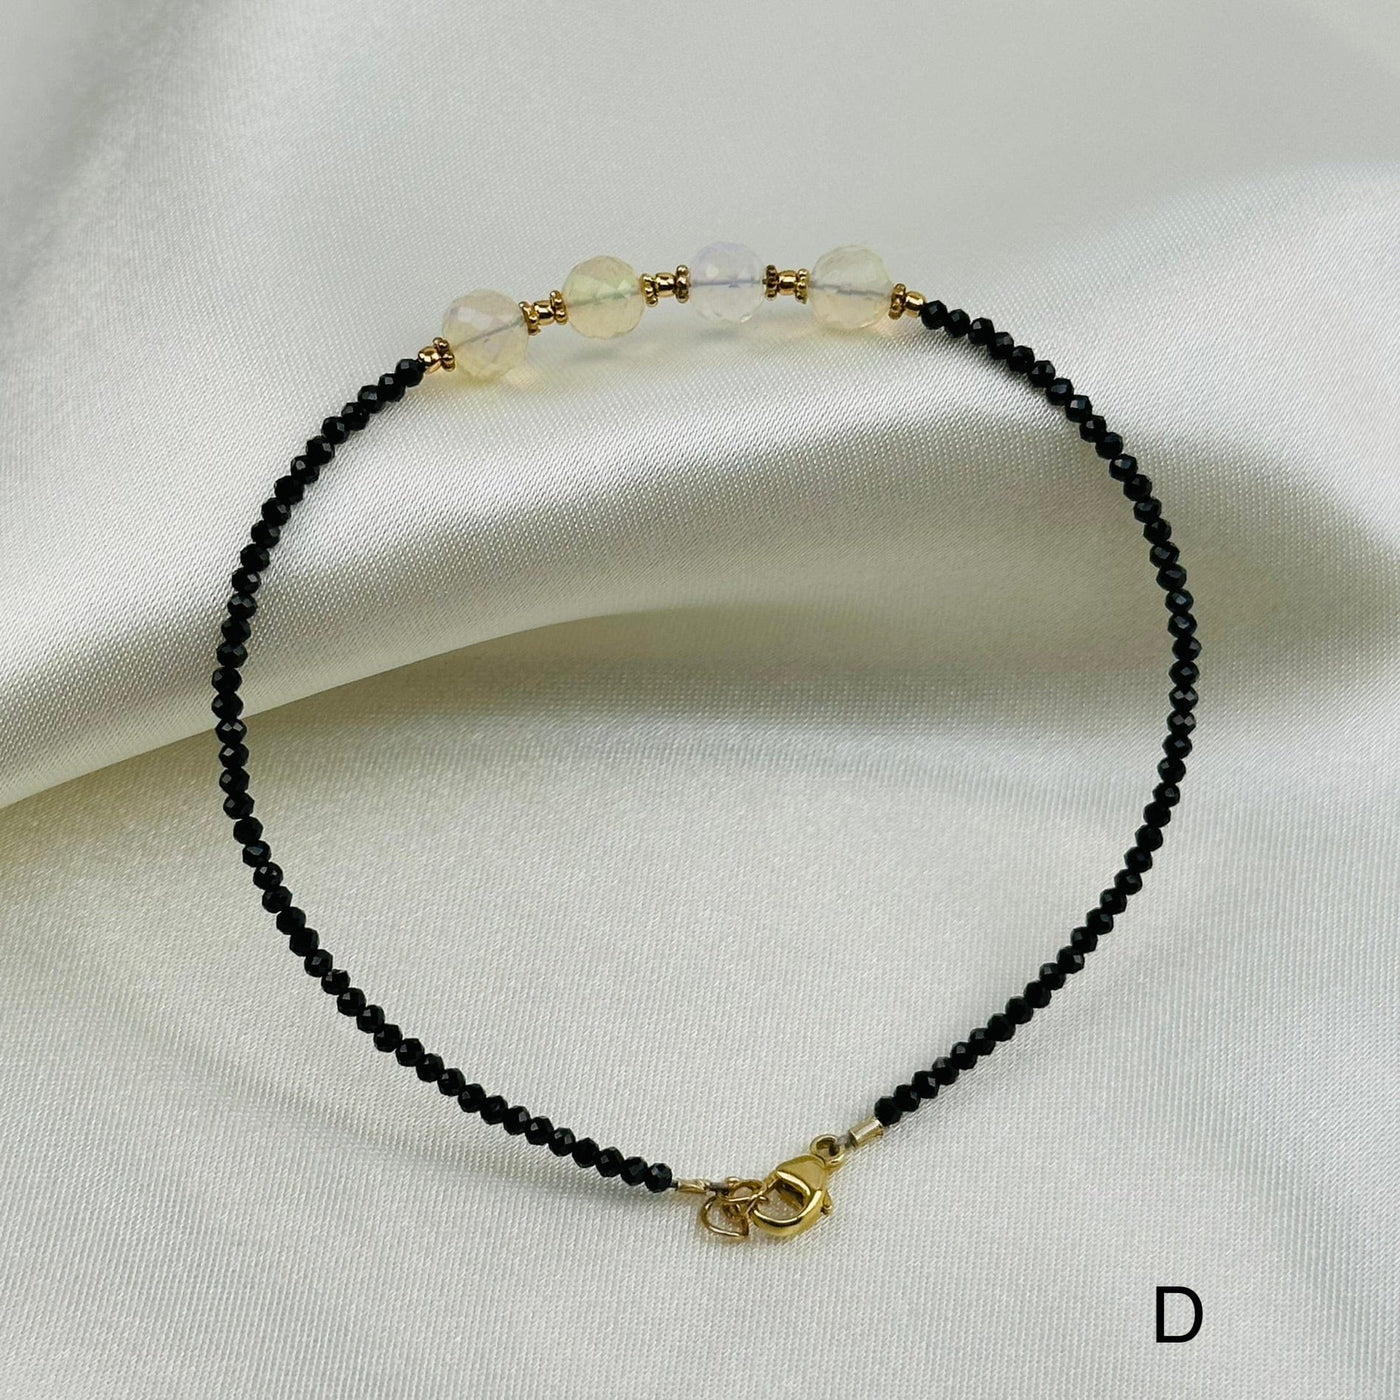 Fancy Opal Bracelet - YOU CHOOSE - option D